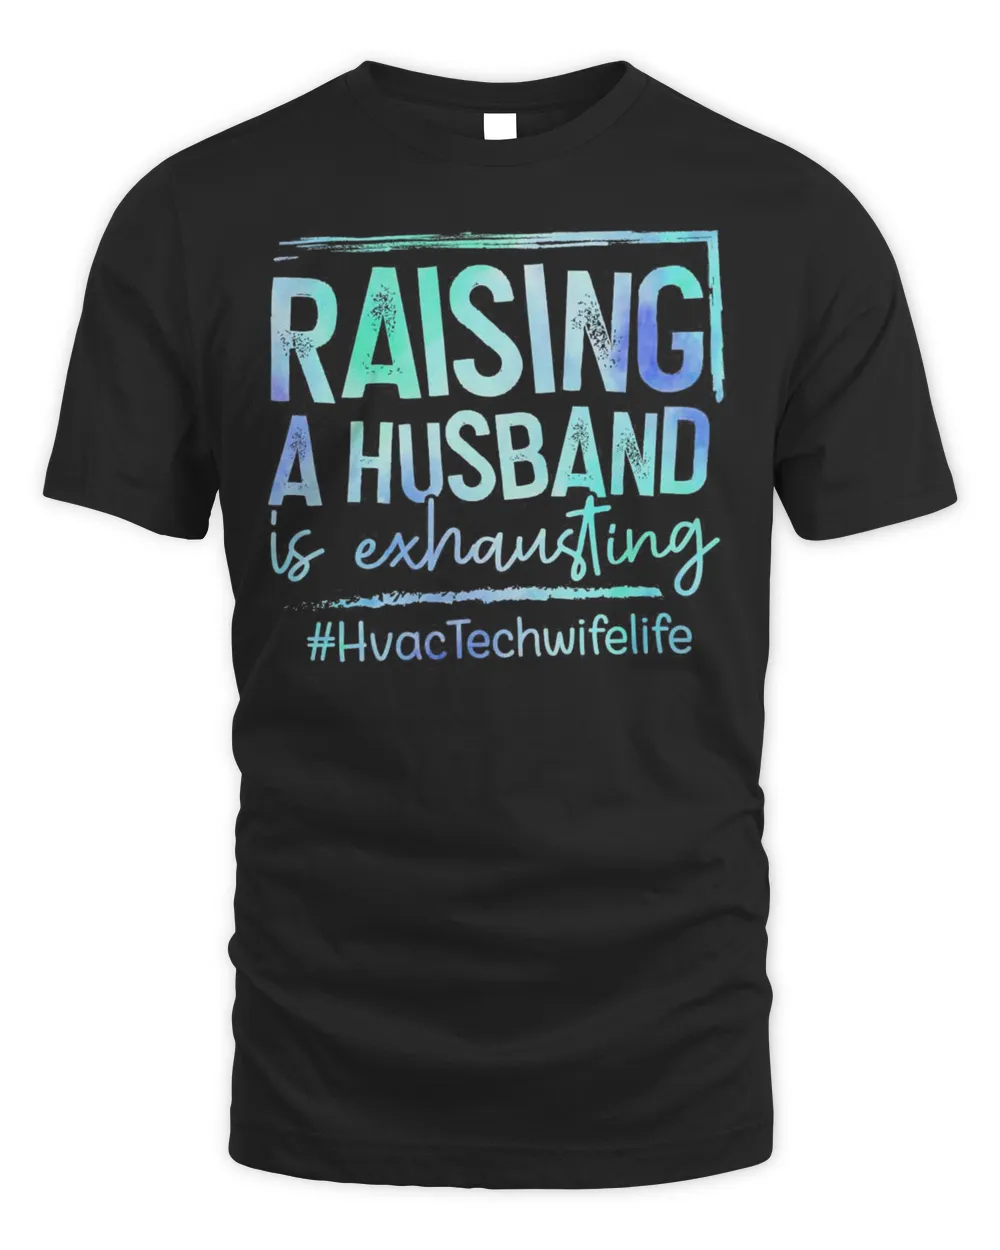 Raising A Husband Is Exhausting Hvac Tech Wife Life Shirt